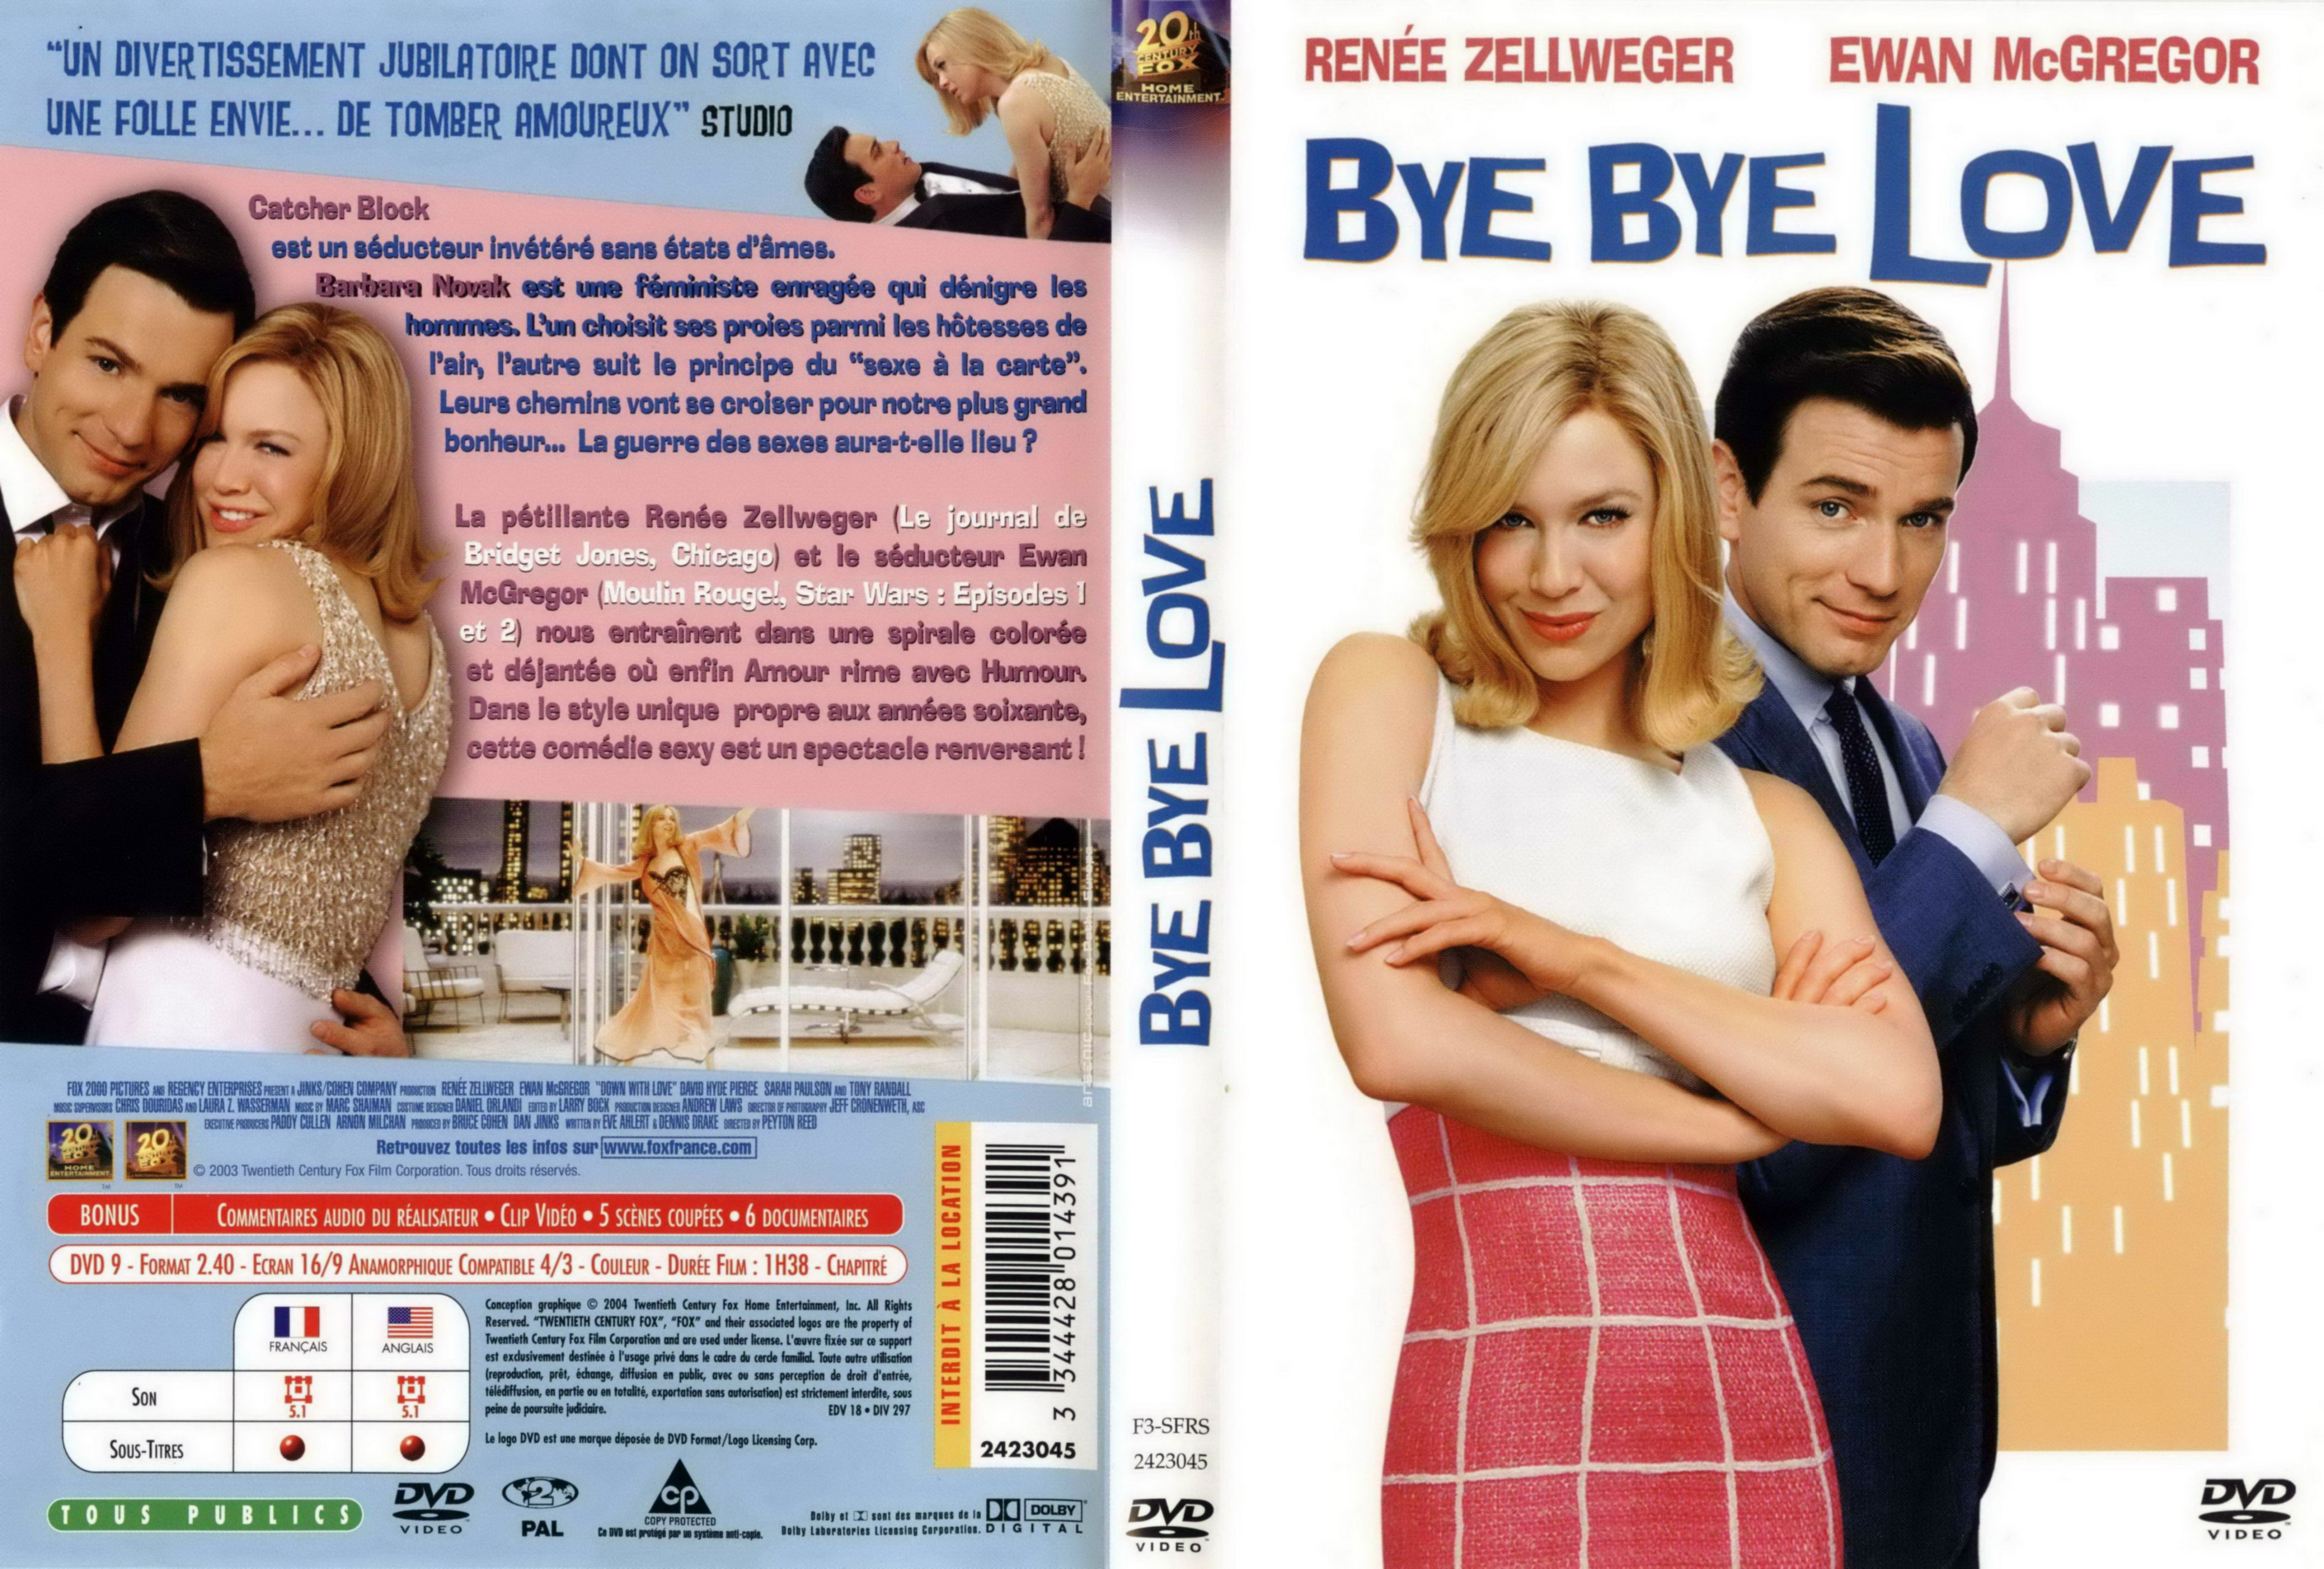 Jaquette DVD Bye bye love v2